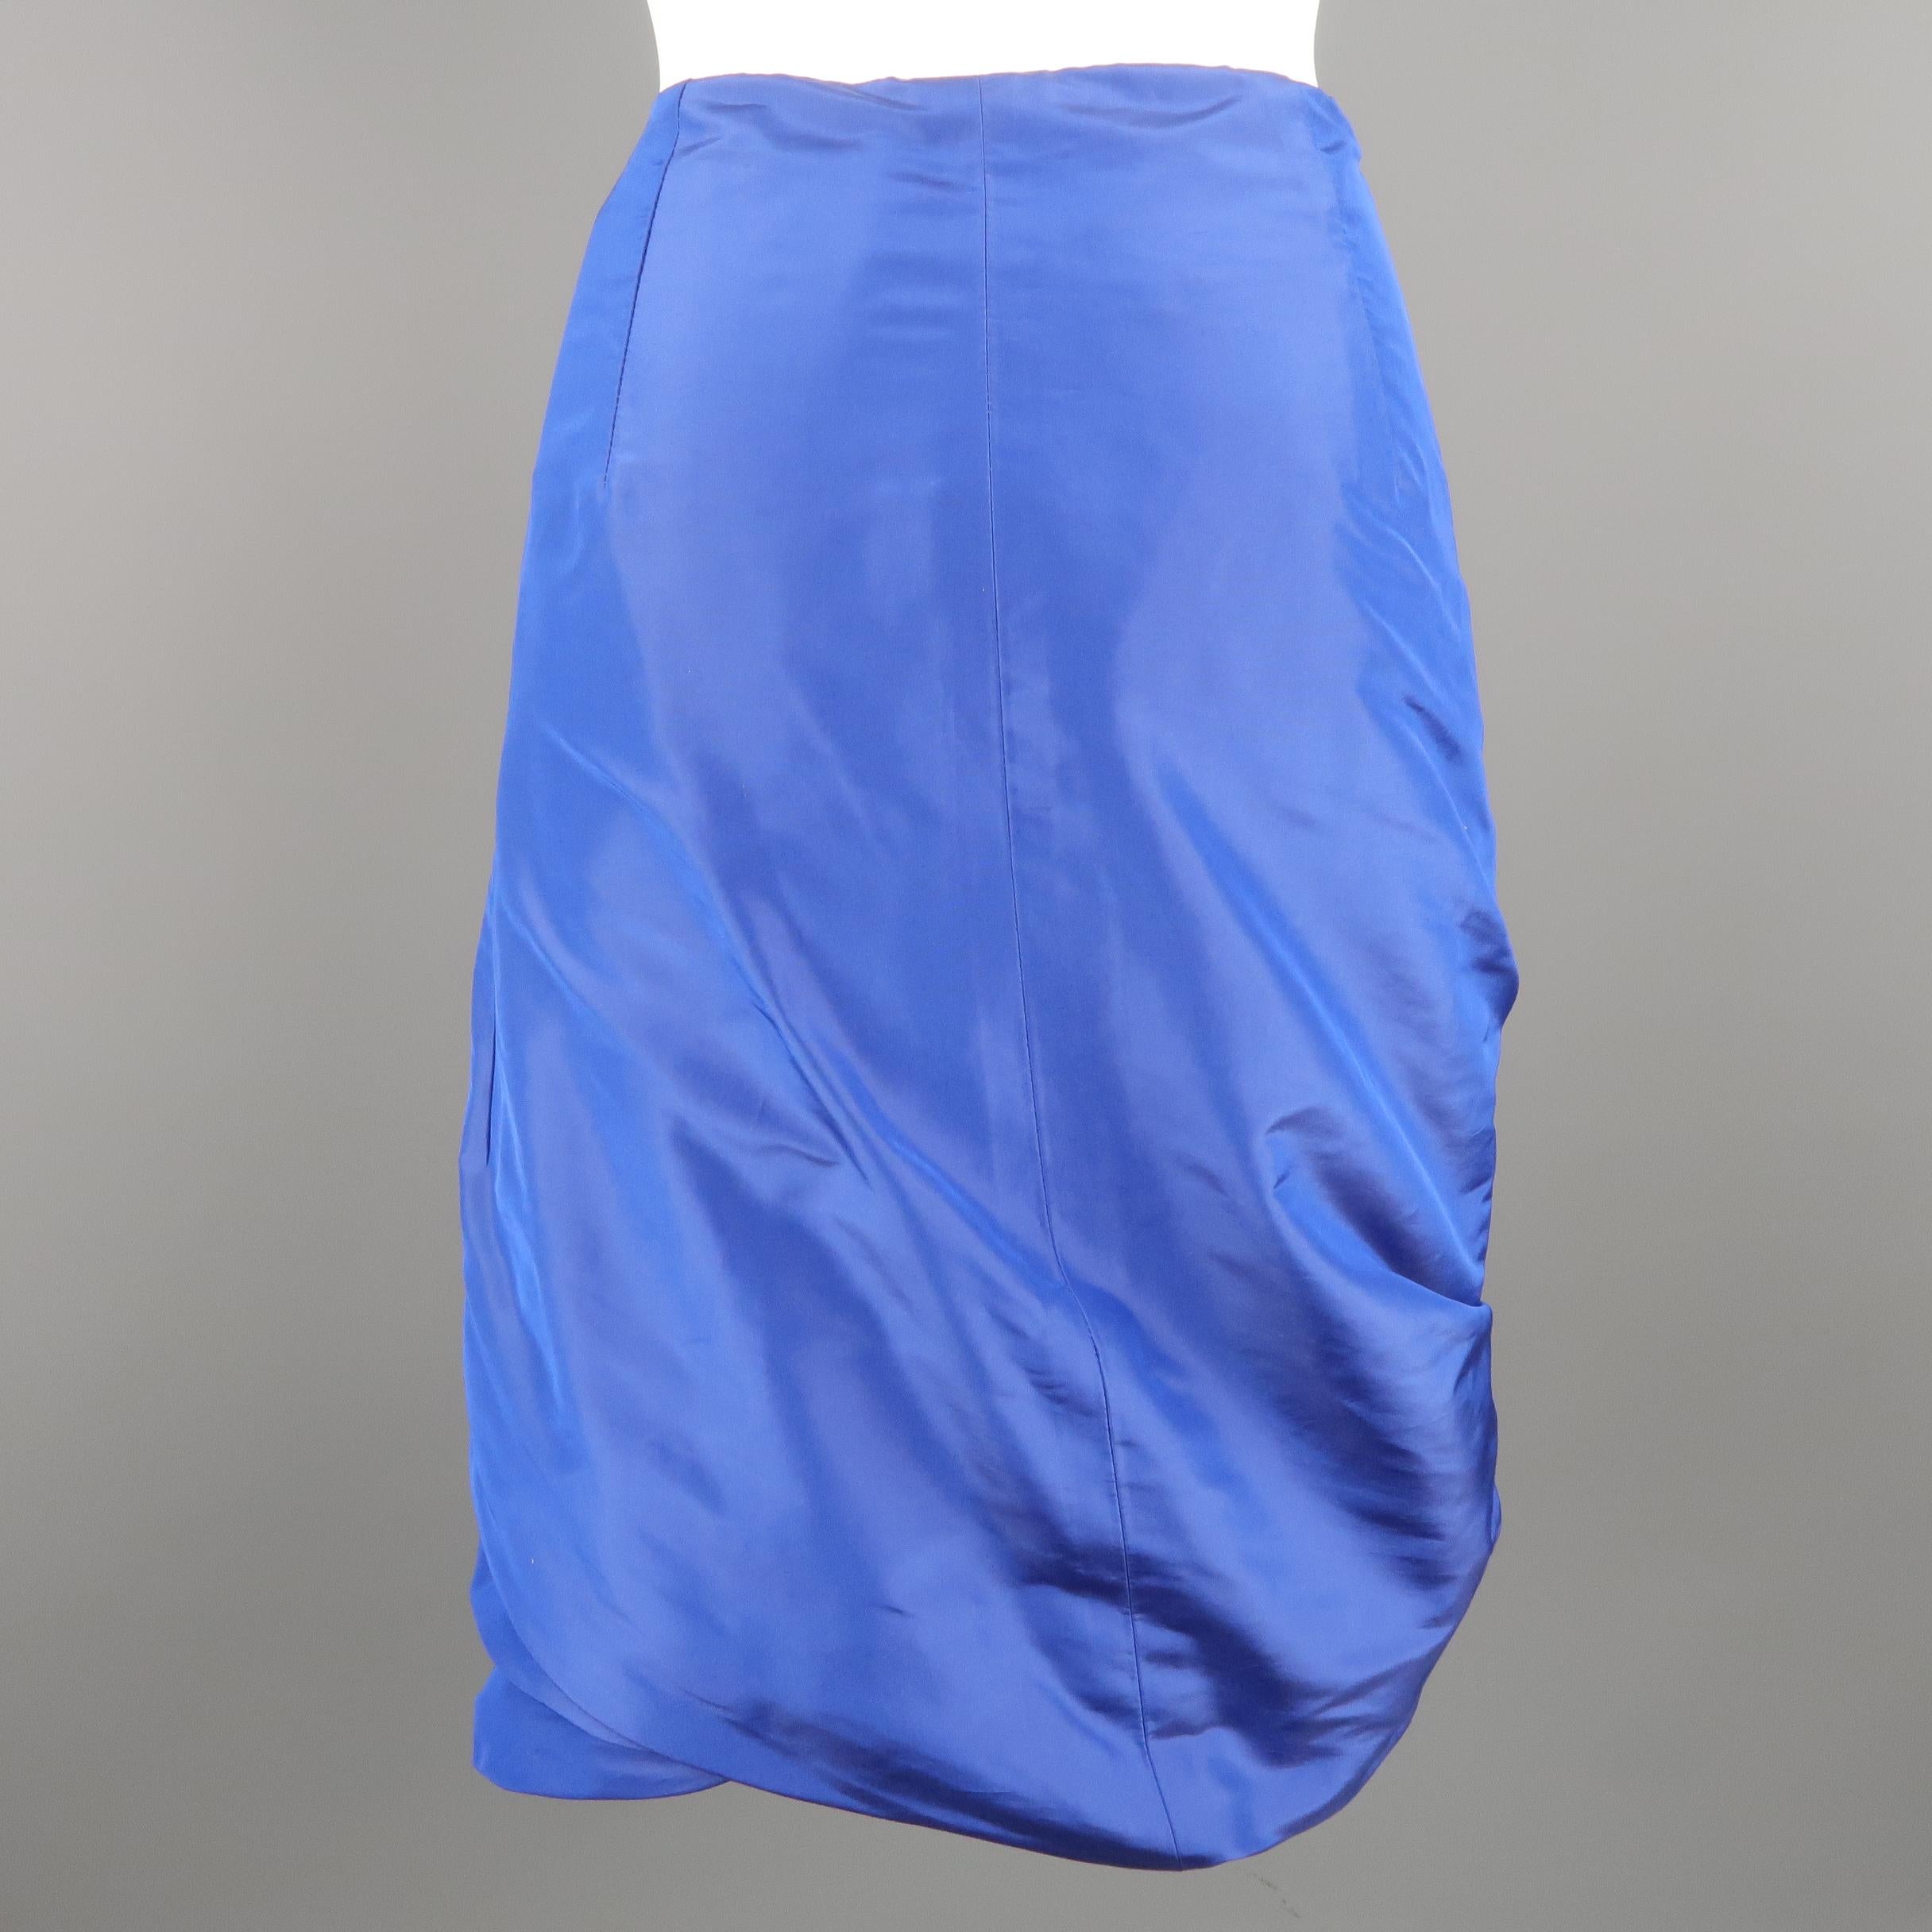 royal blue asymmetrical skirt